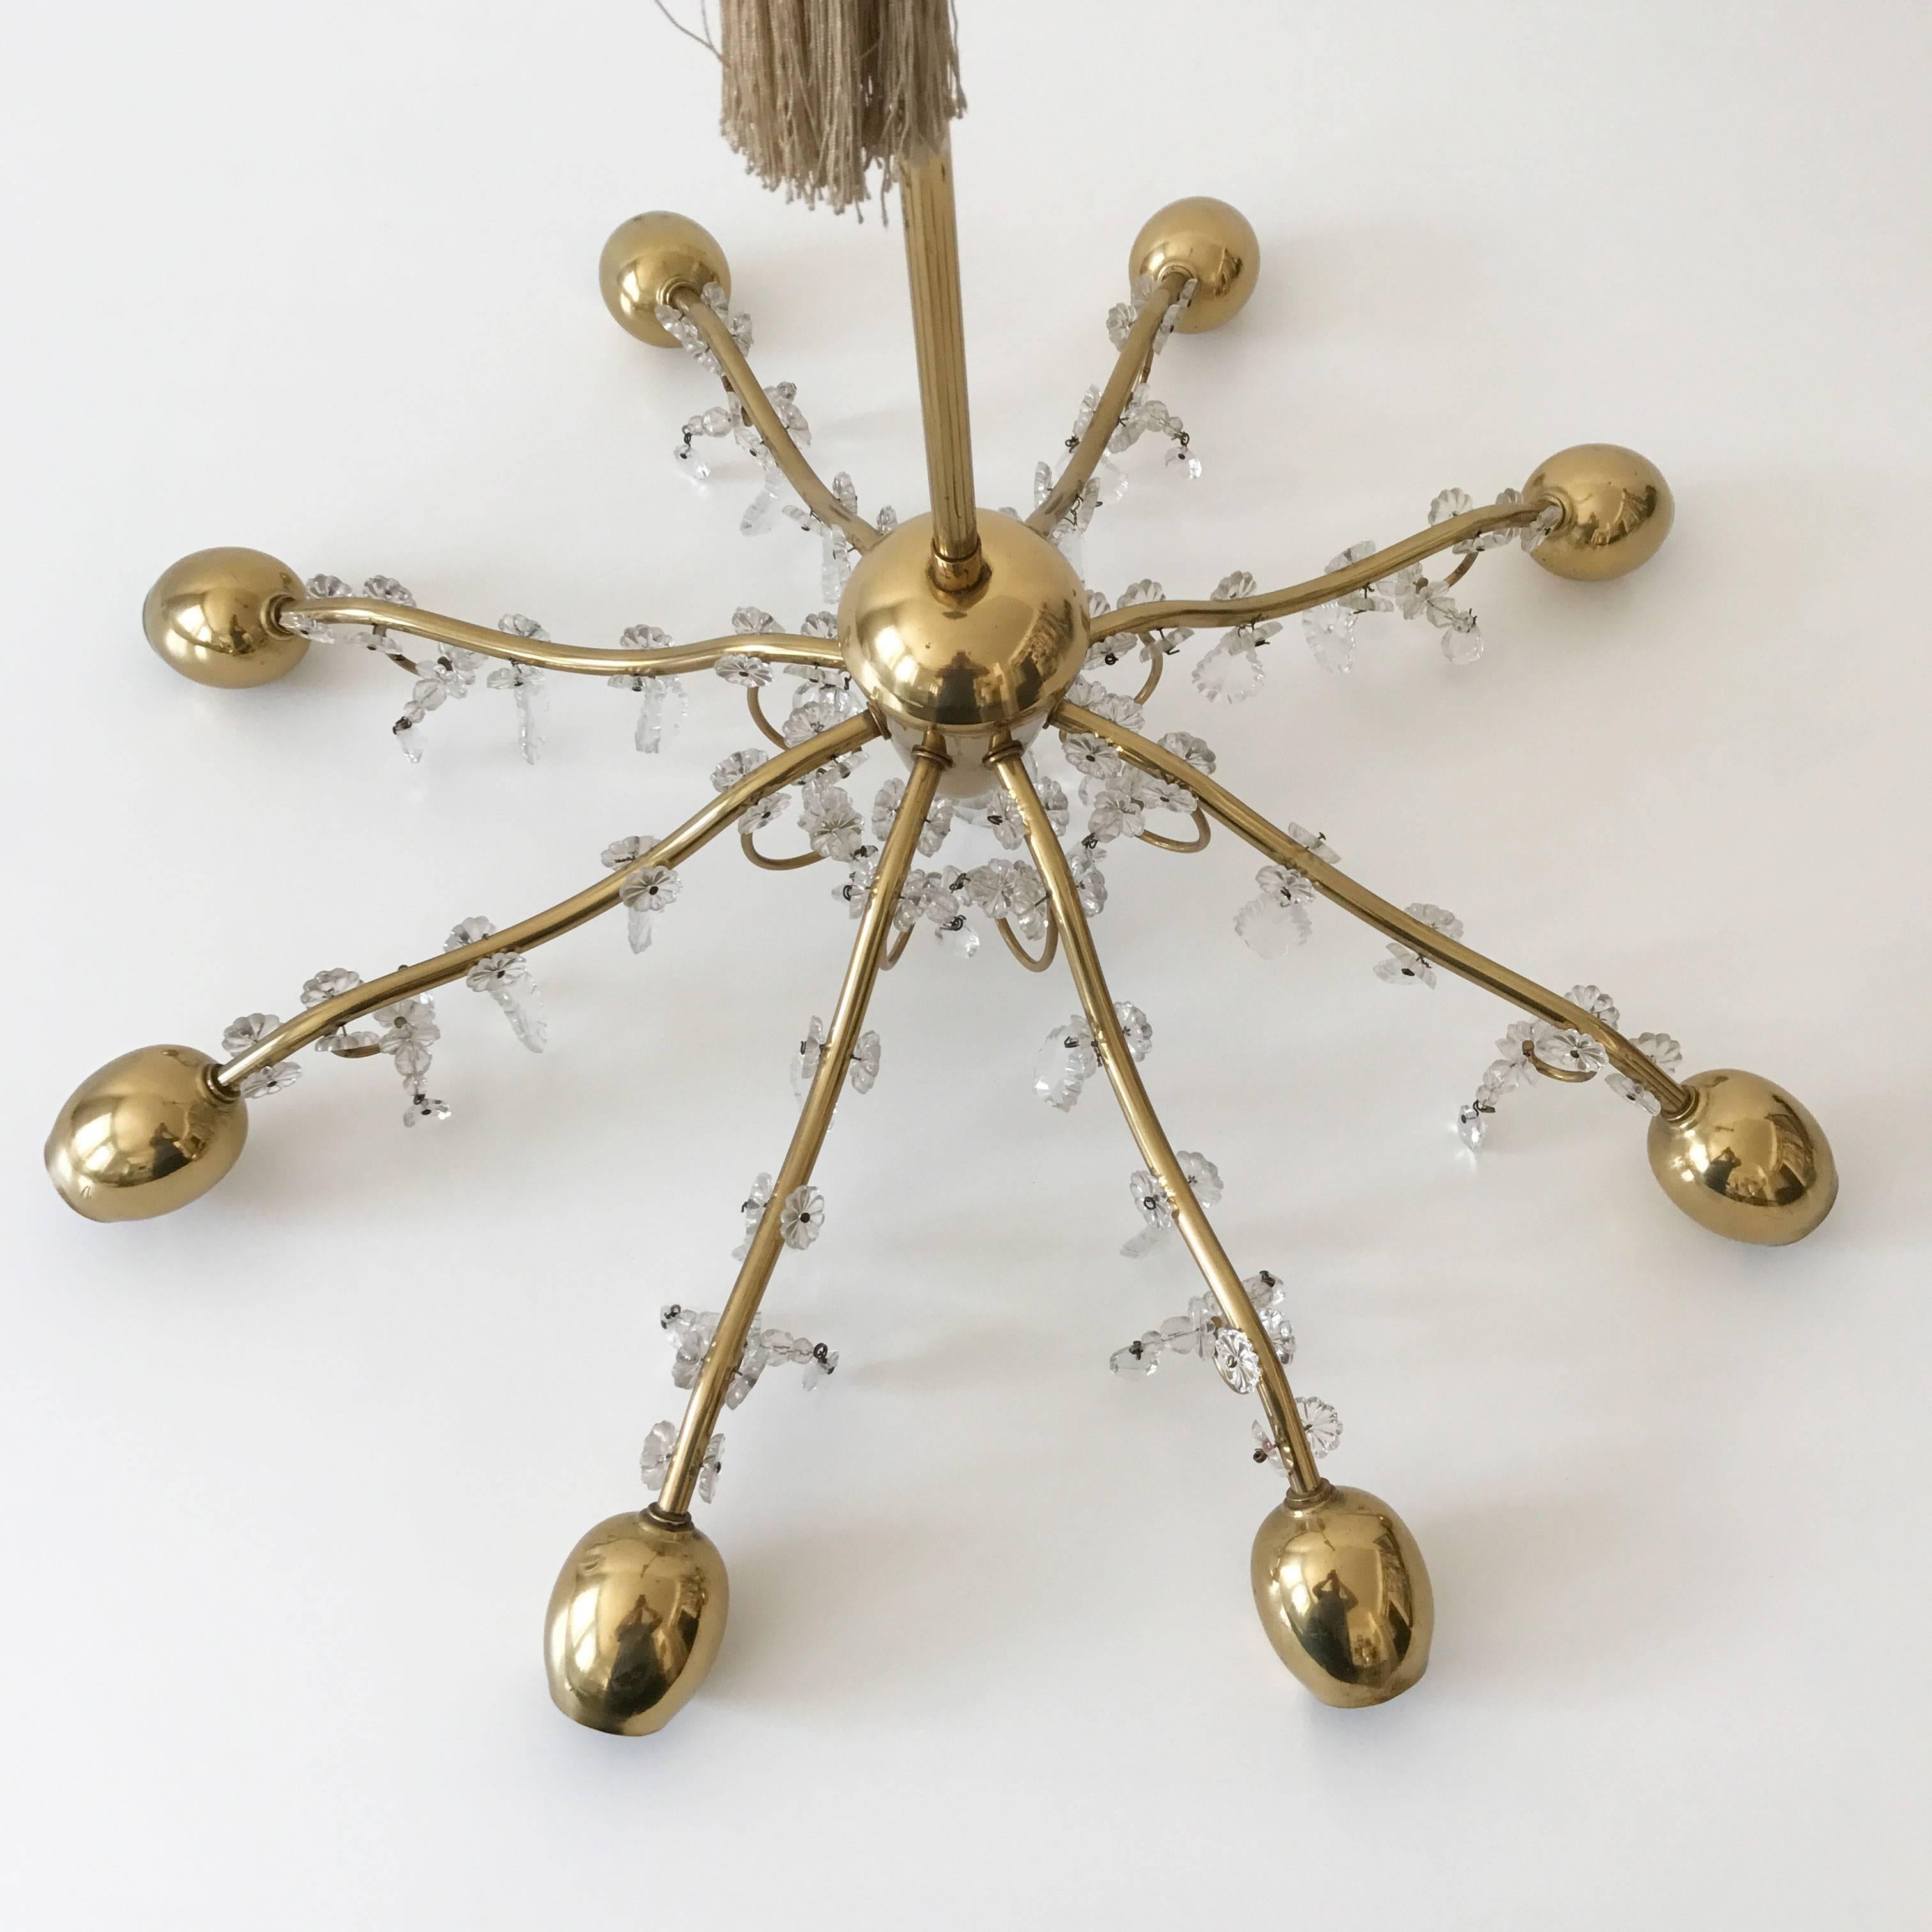 Eight-Armed Sputnik Chandelier or Pendant Lamp Bud by J.&L. Lobmeyr Vienna 1950s For Sale 4